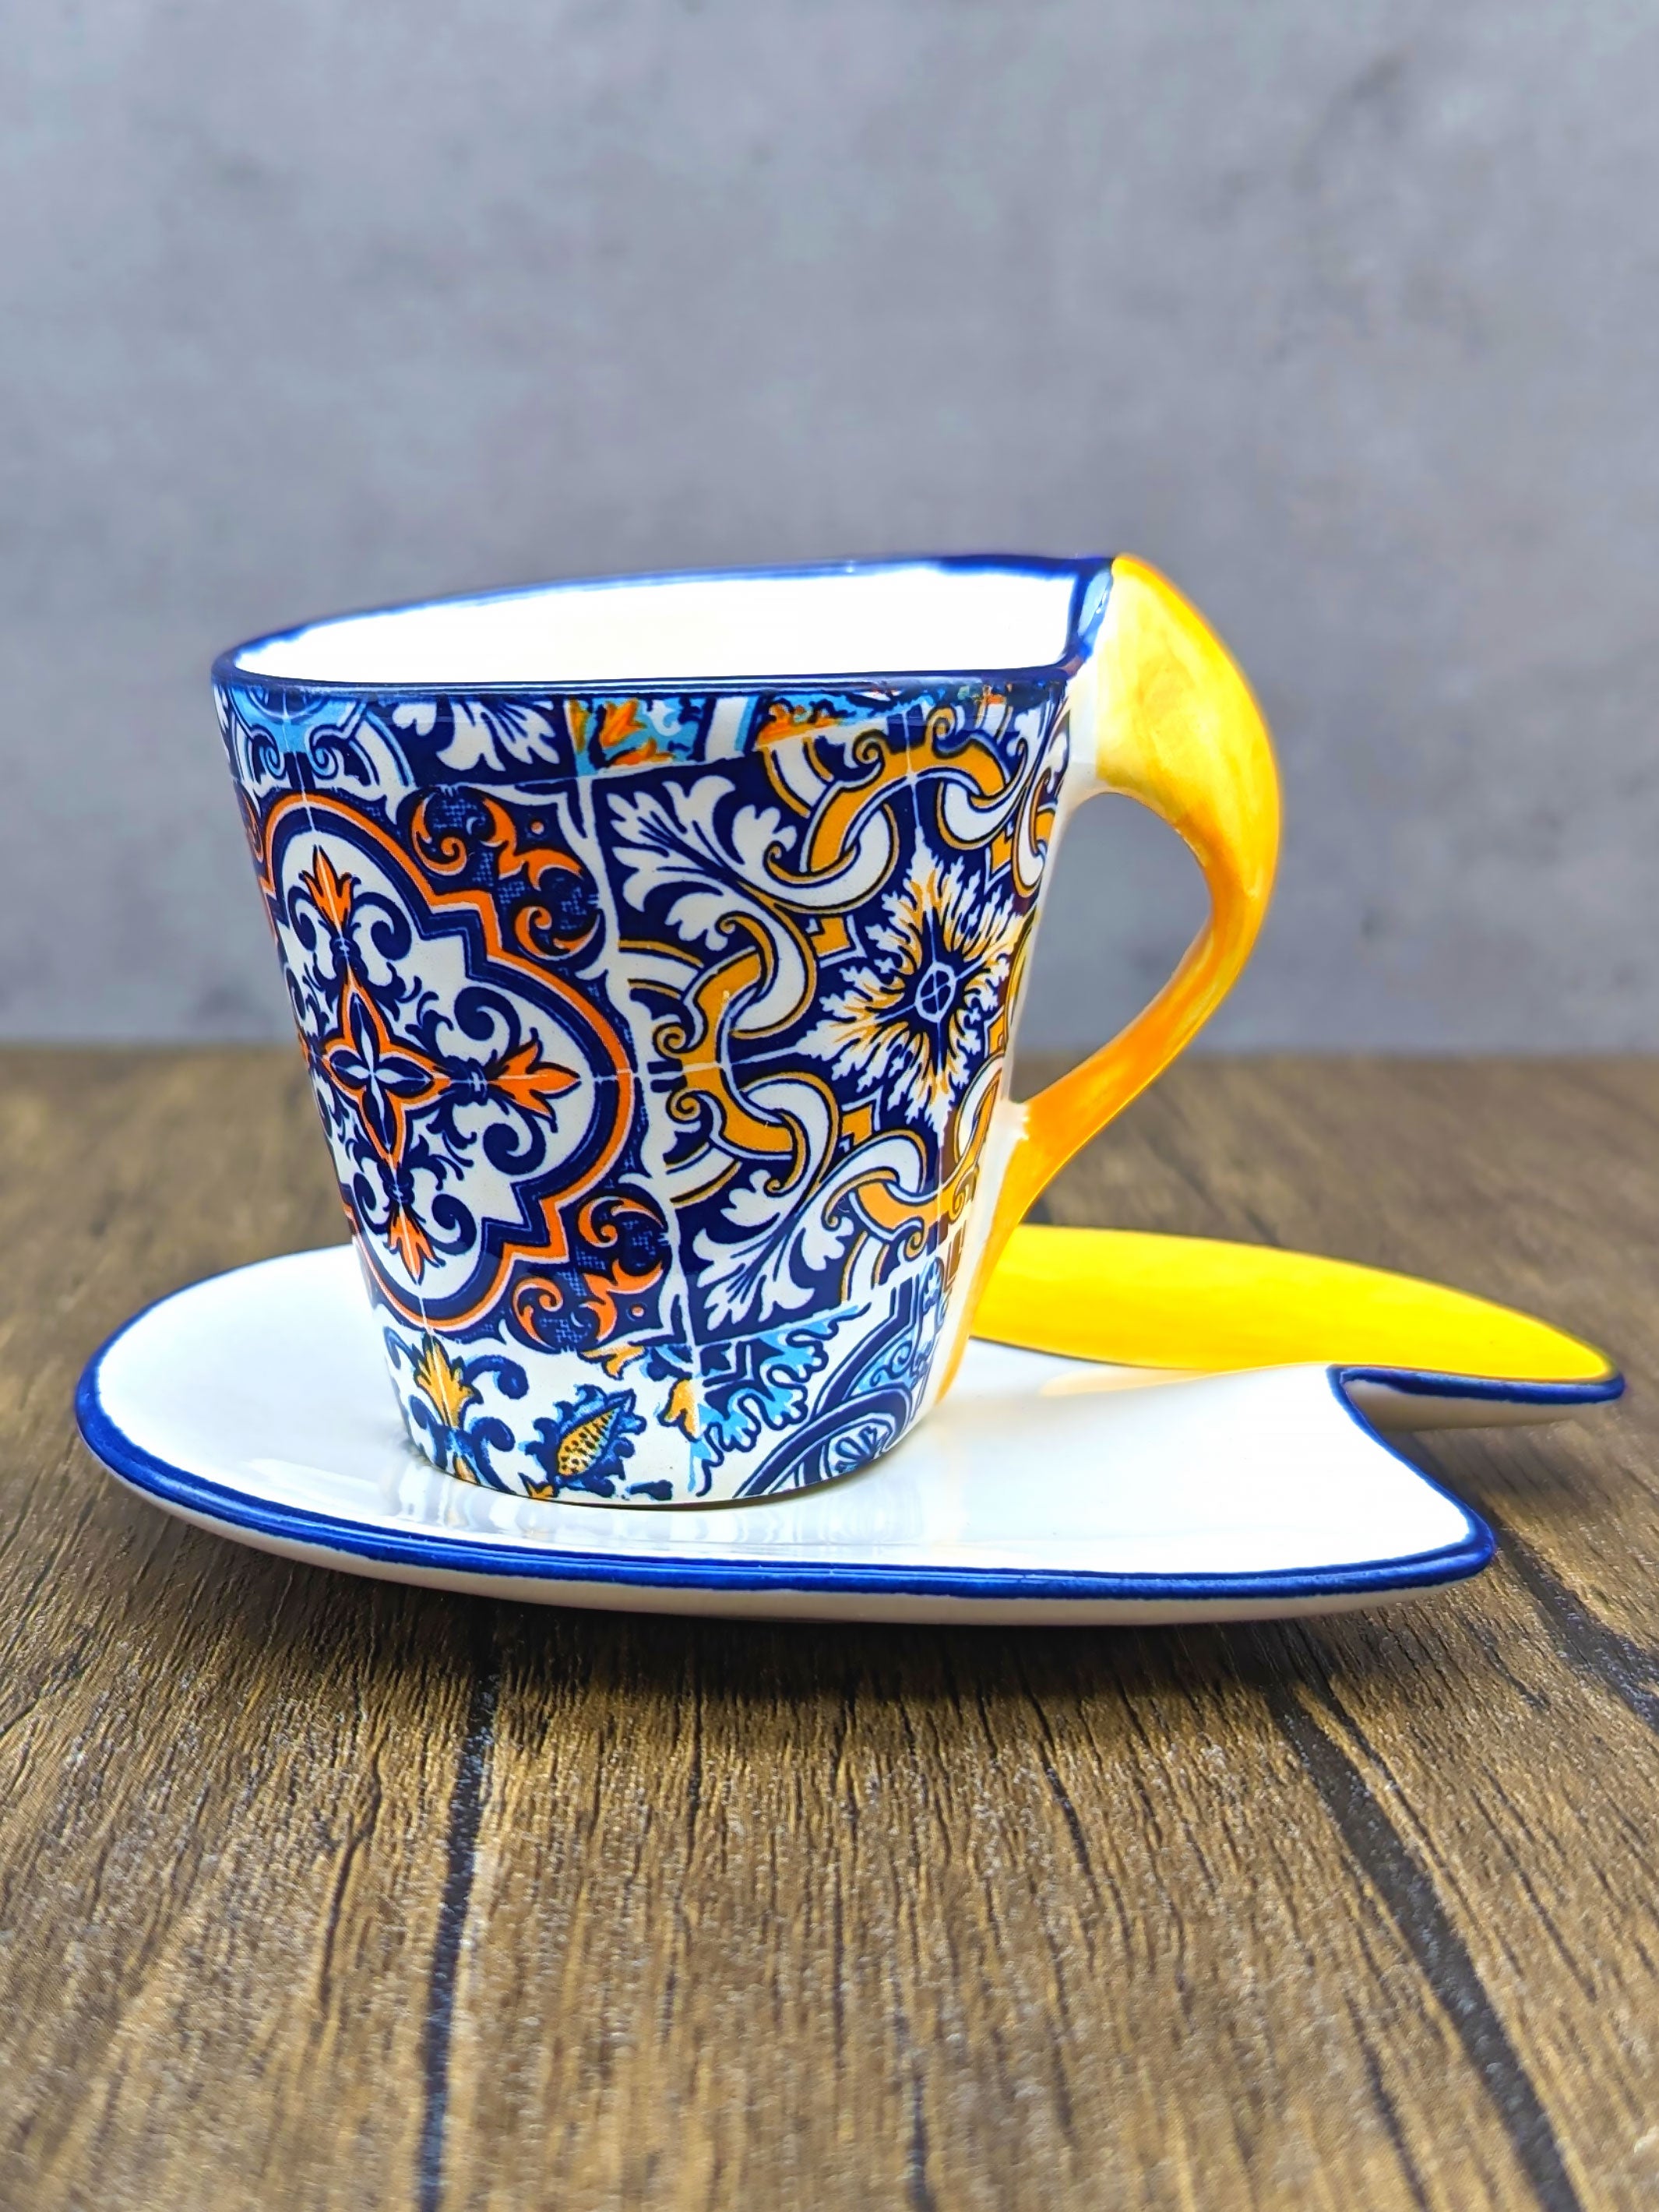 Portuguese Pottery Alcobaça Ceramic Hand Painted Coffee Espresso Cups – Set of 4